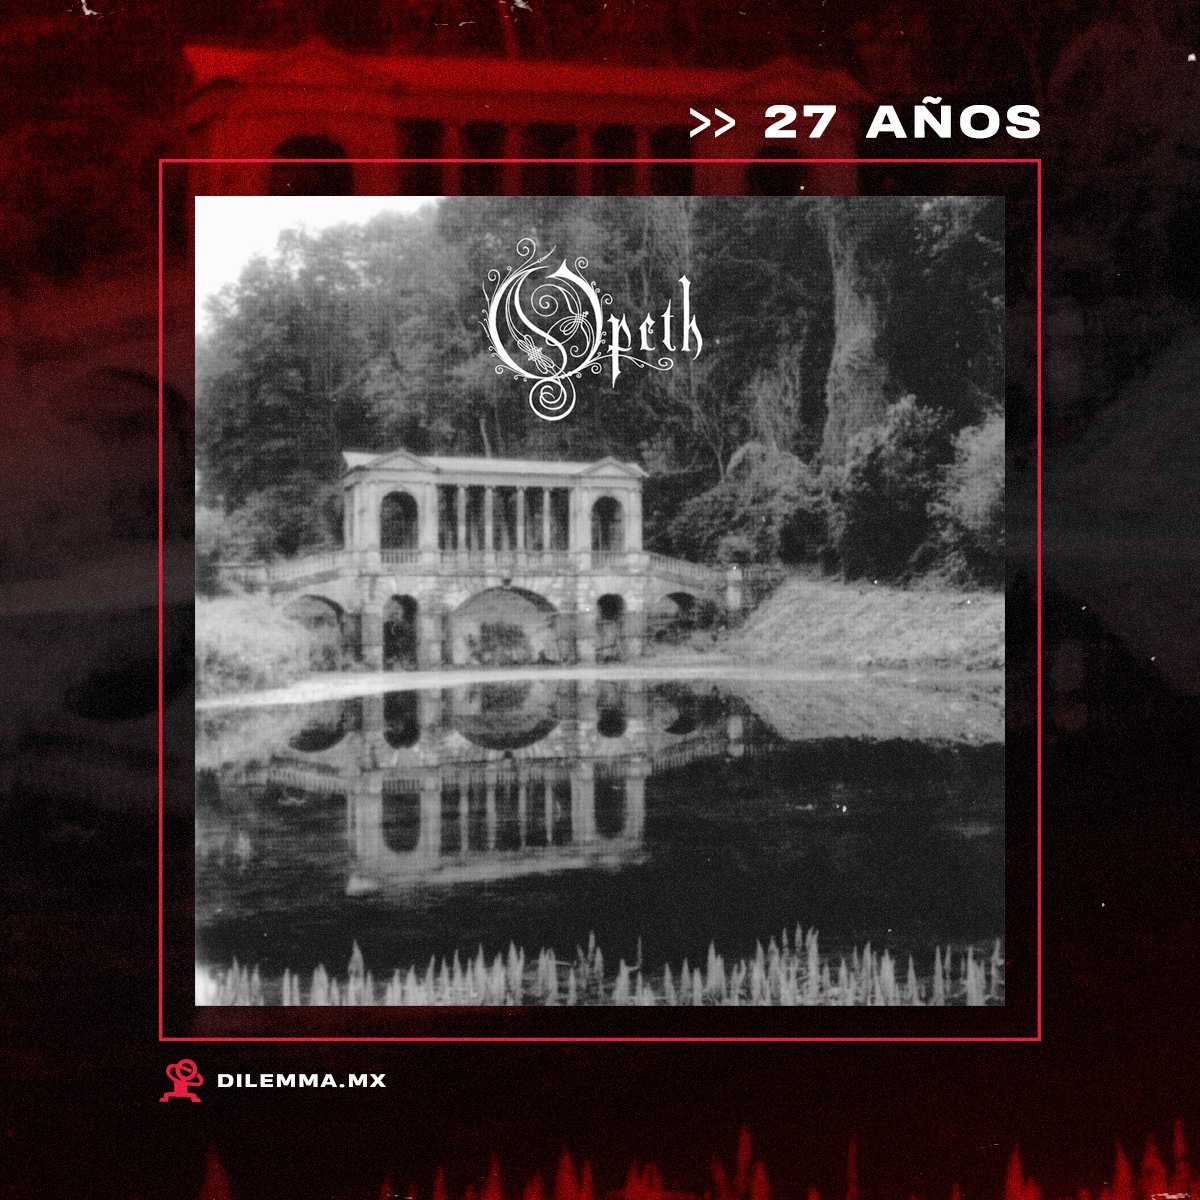 Hoy se cumplen 27 años del Morningrise de @OfficialOpeth ¿Cuál es tu canción favorita de este álbum? #Opeth #Morningrise